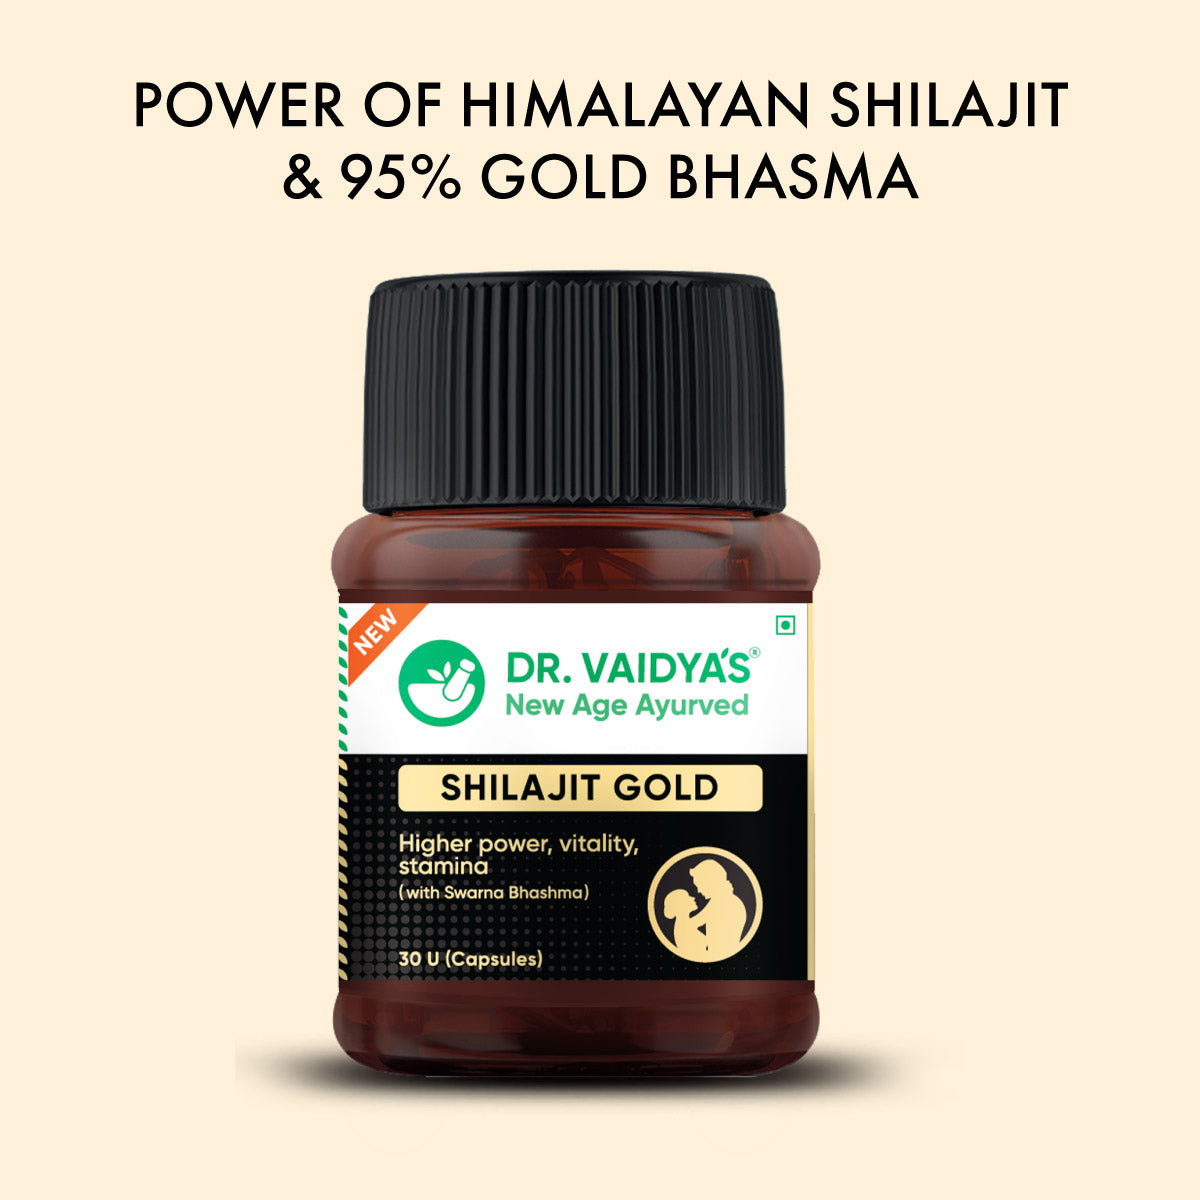 Shilajit Gold - For more Stamina & better Performance